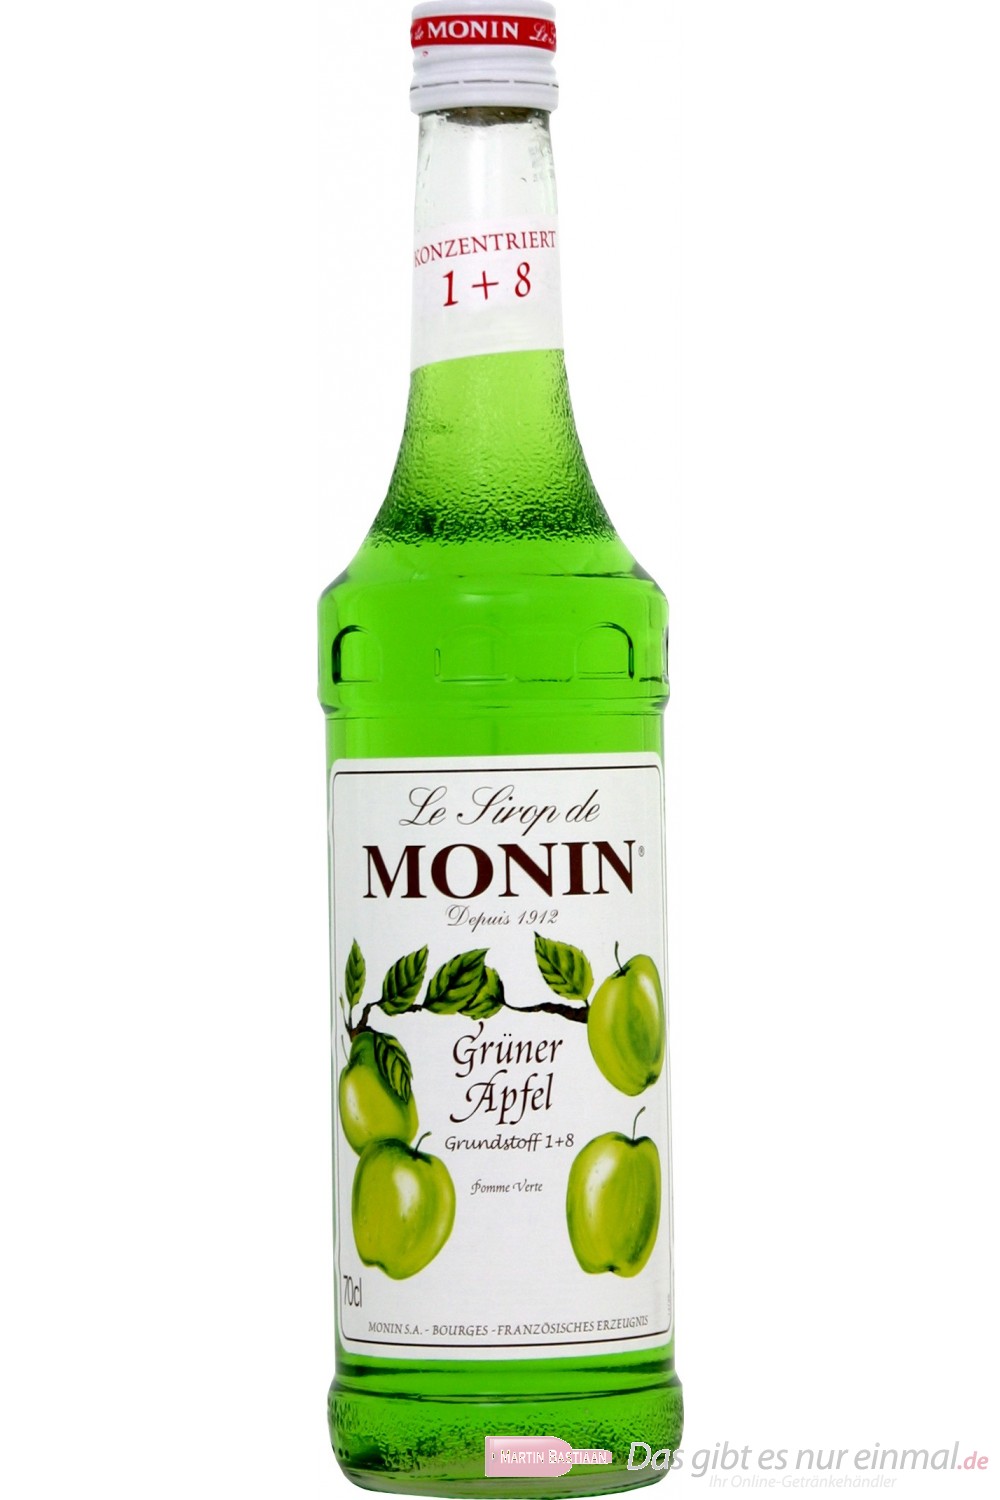 Le Sirop de Monin Grüner Apfel Sirup 1:8 0,7 l Flasche